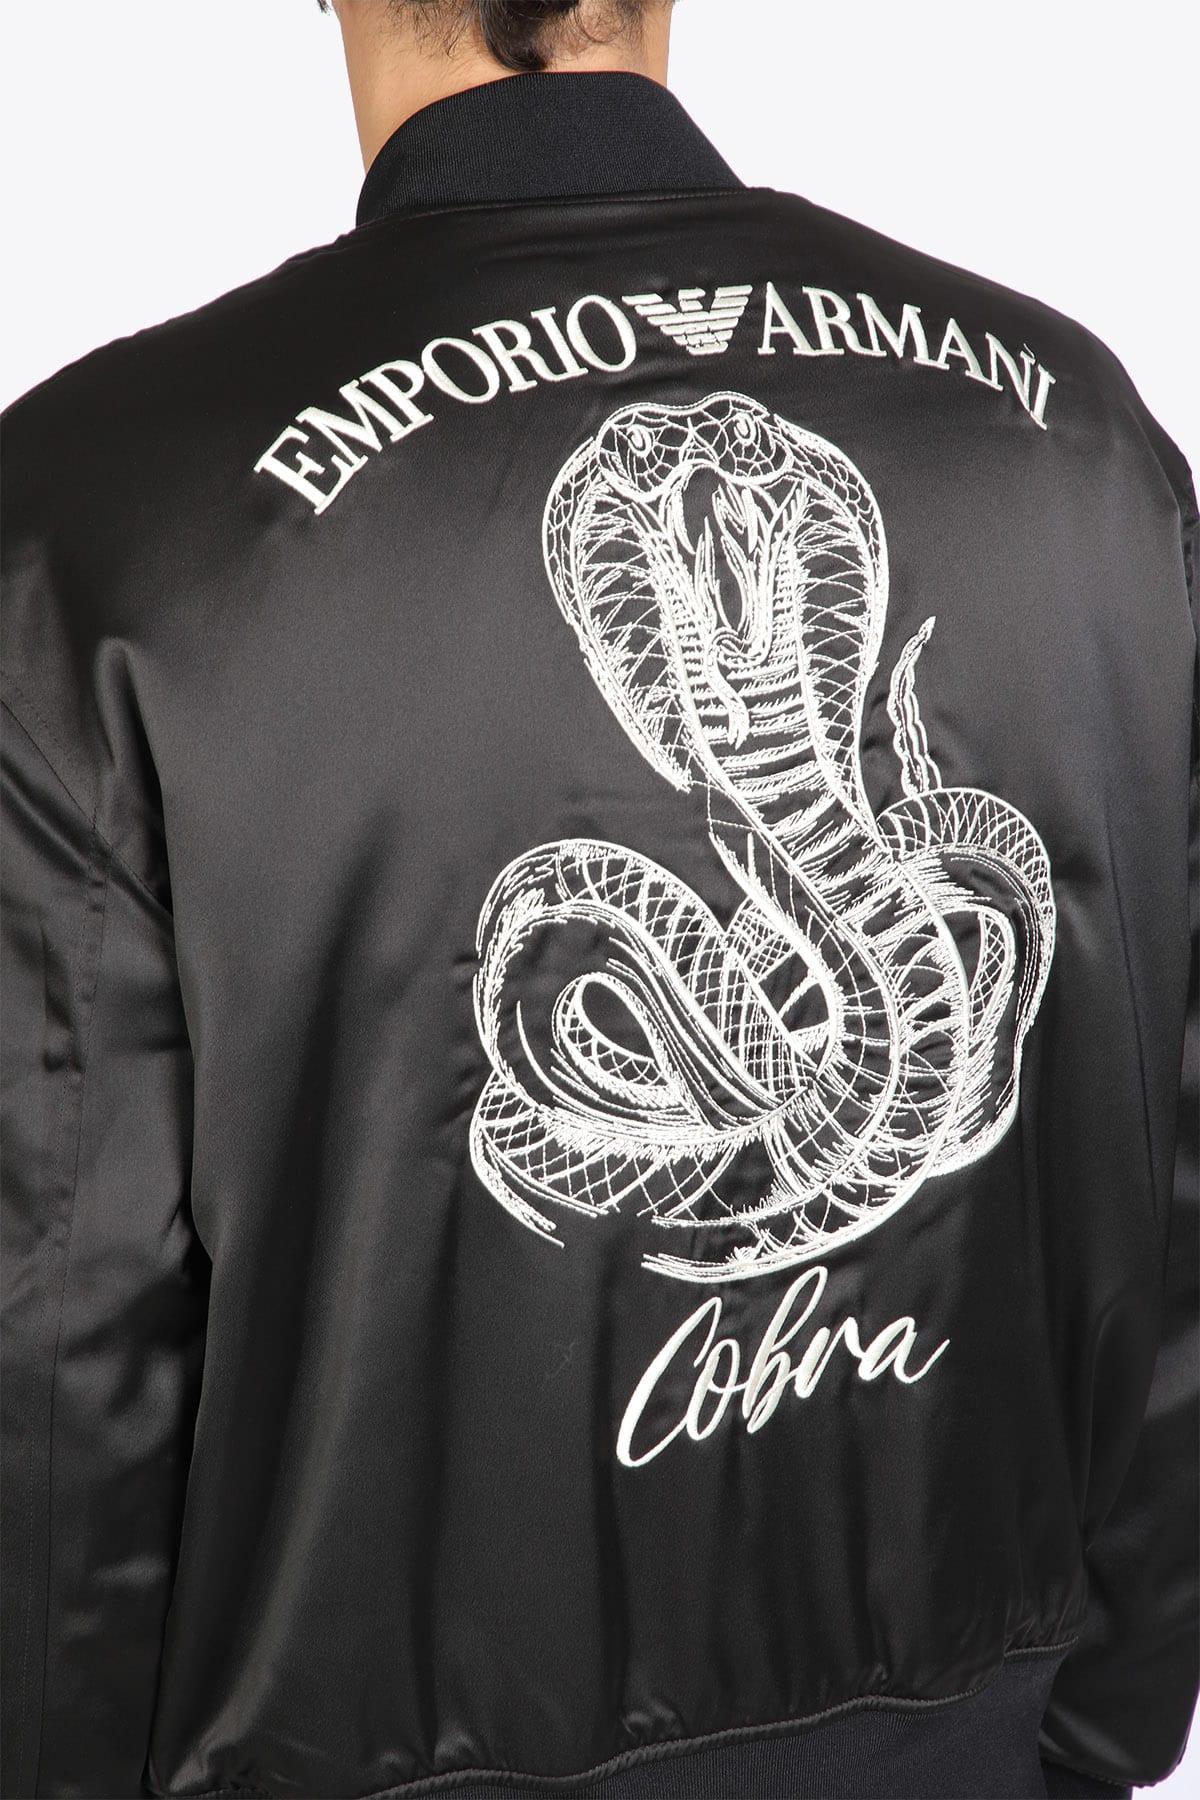 Emporio Armani Embossed-Monogram Bomber Jacket